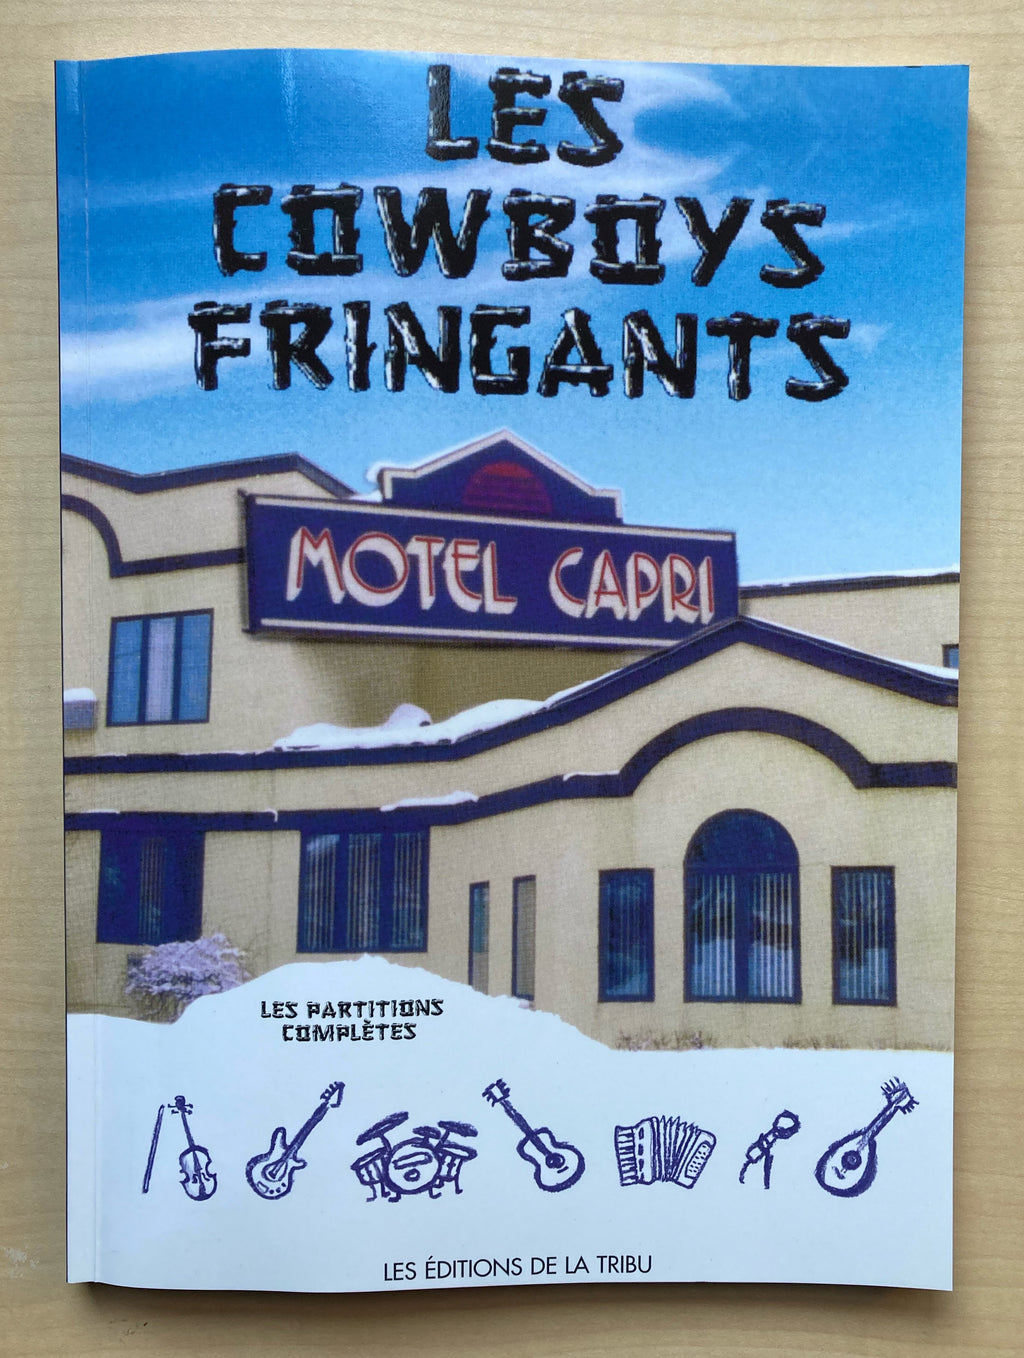 PARTITIONS - Les Cowboys Fringants - Motel Capri